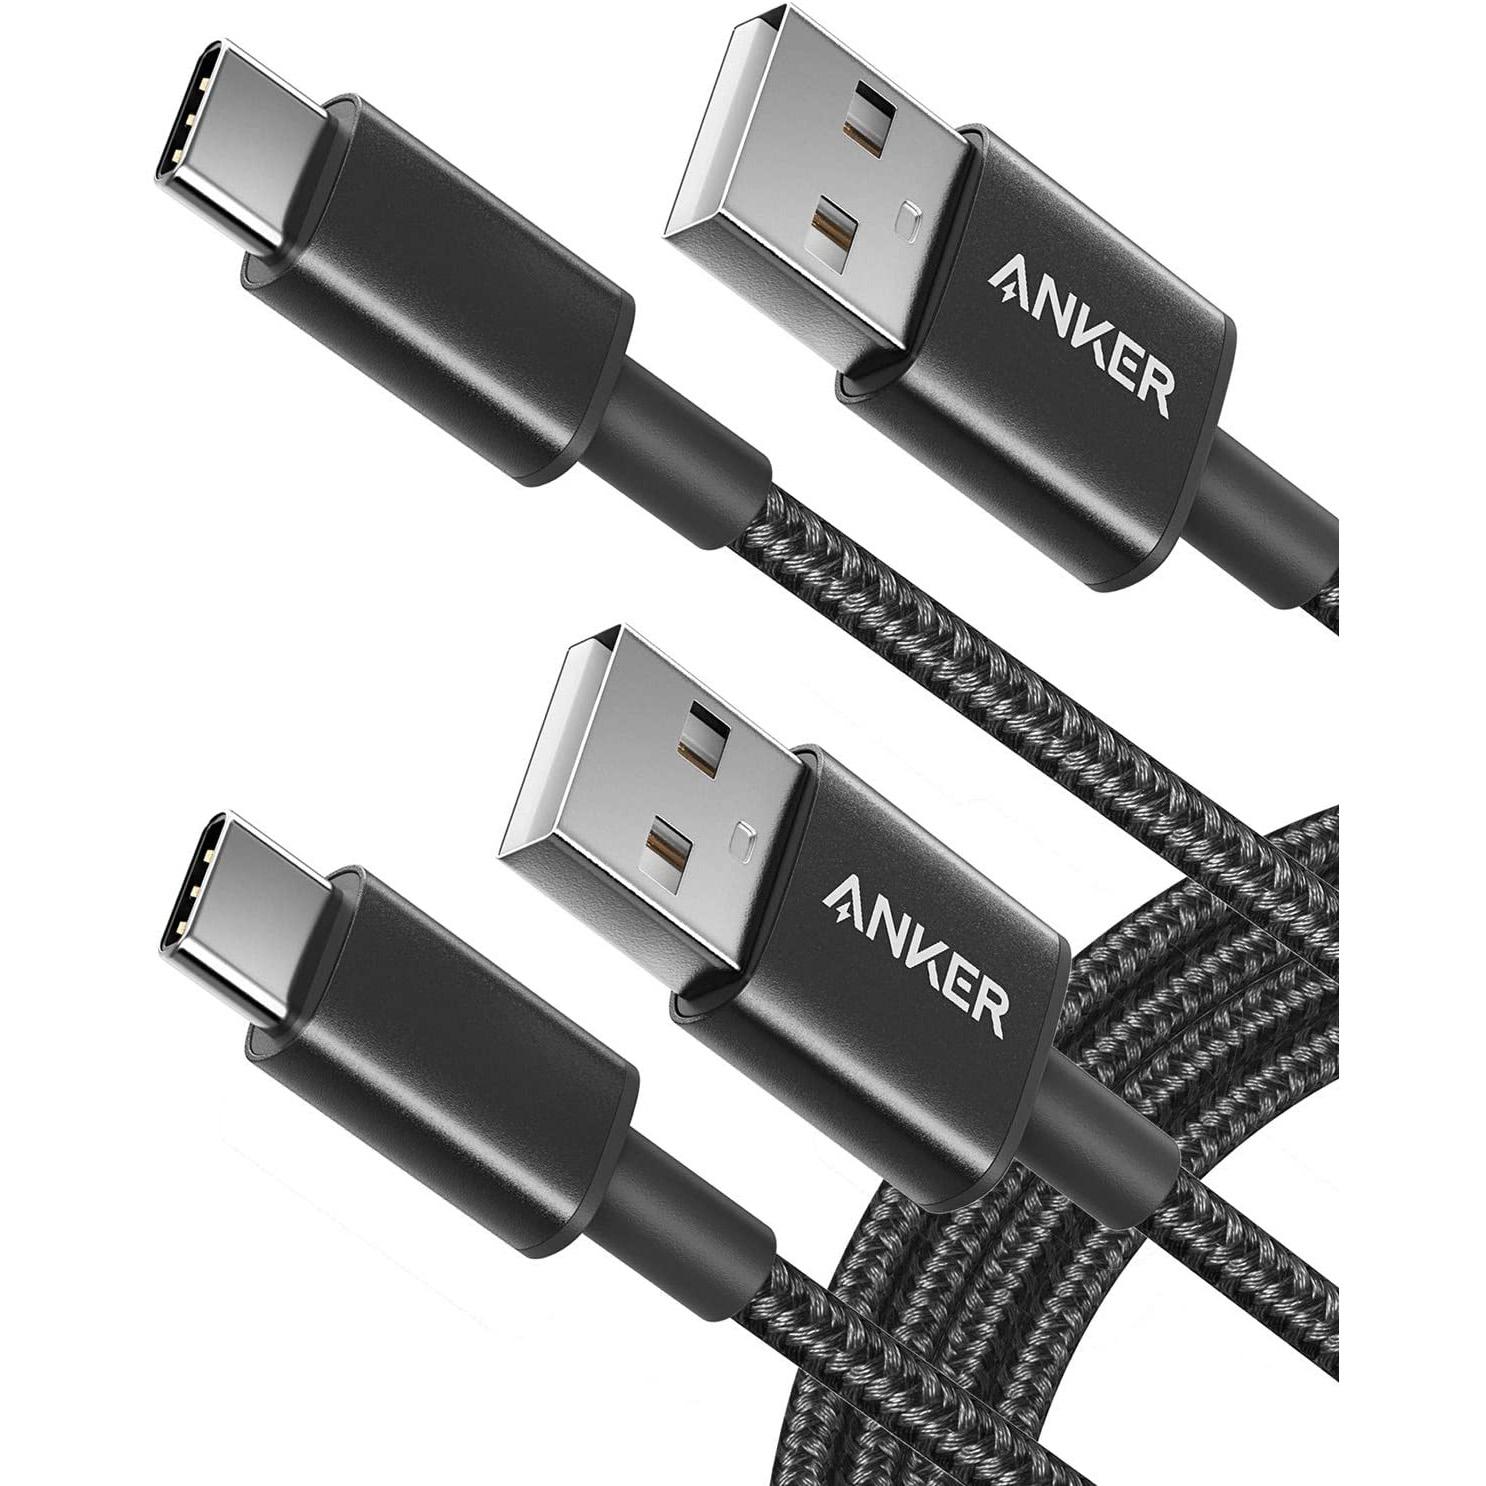 2 Anker Nylon-Braided USB-C to USB for $6.99